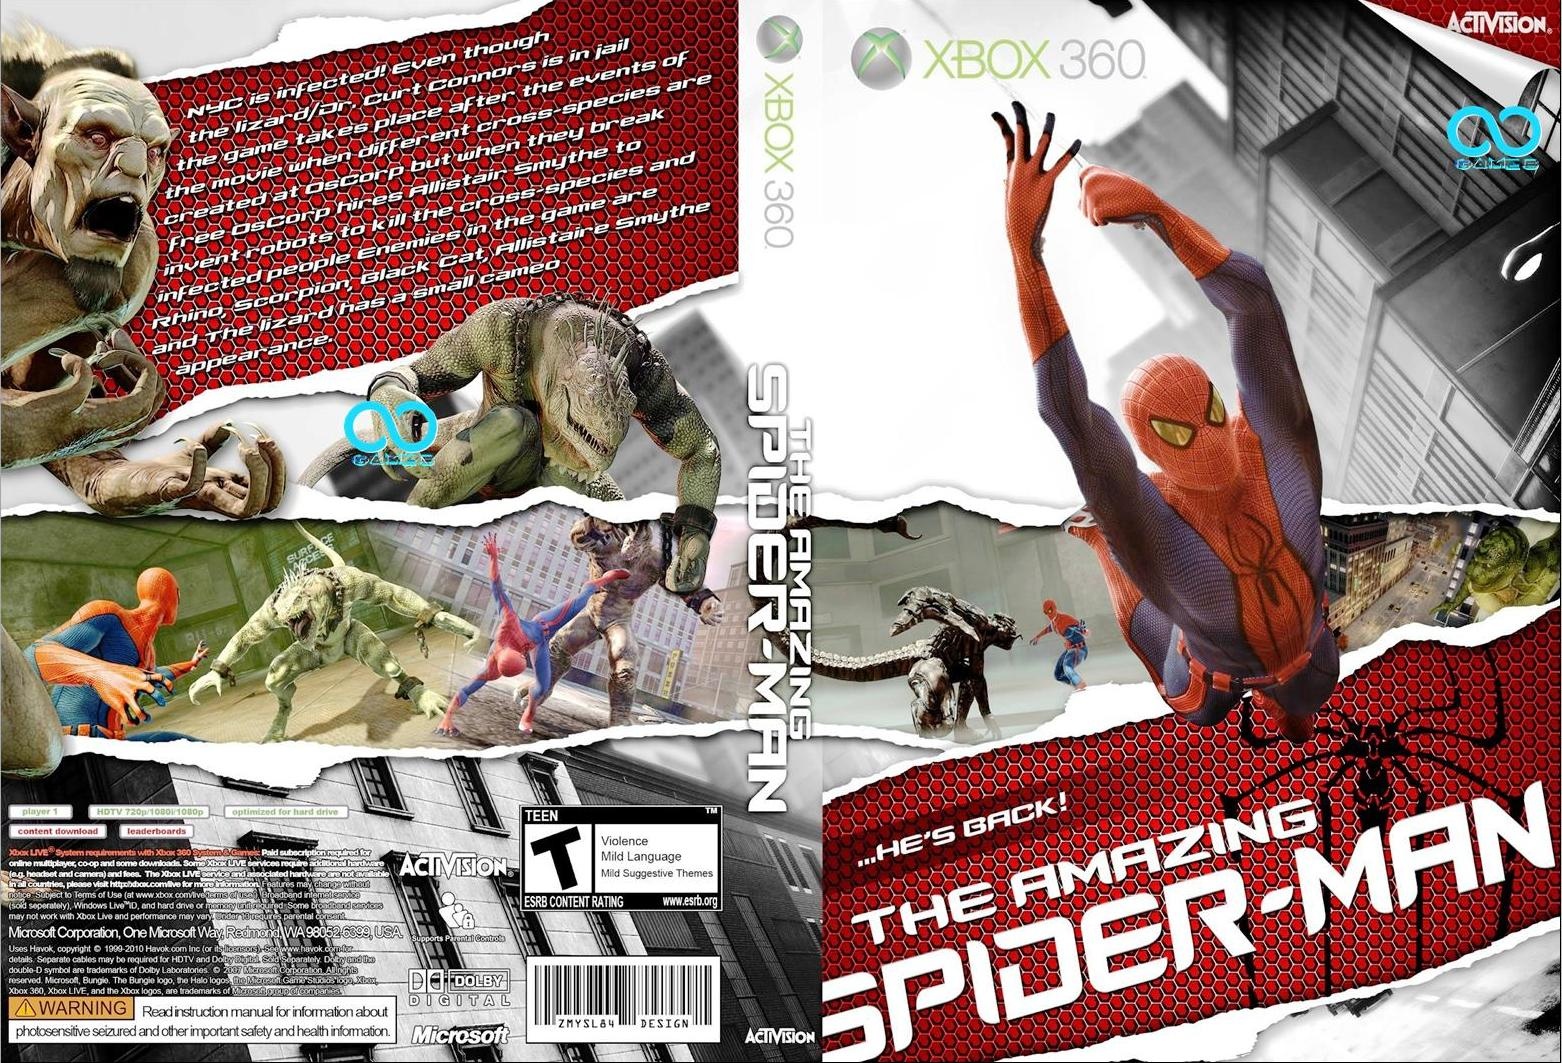 The Amazing Spiderman Xbox 360 box cover